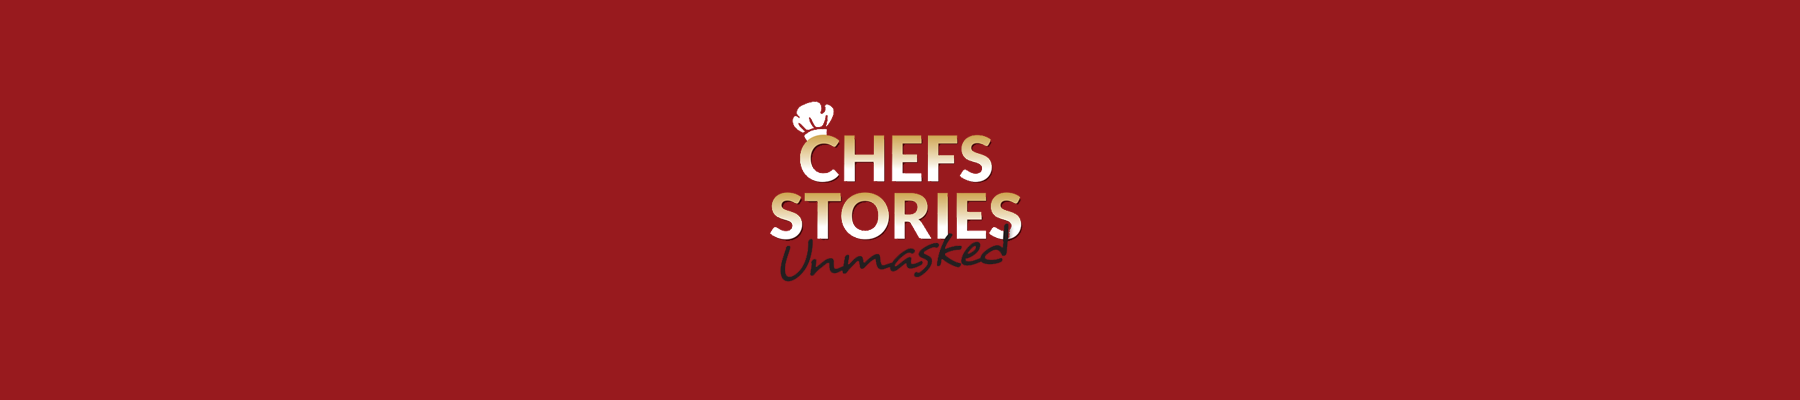 Chefs Stories Unmasked - Chef Works